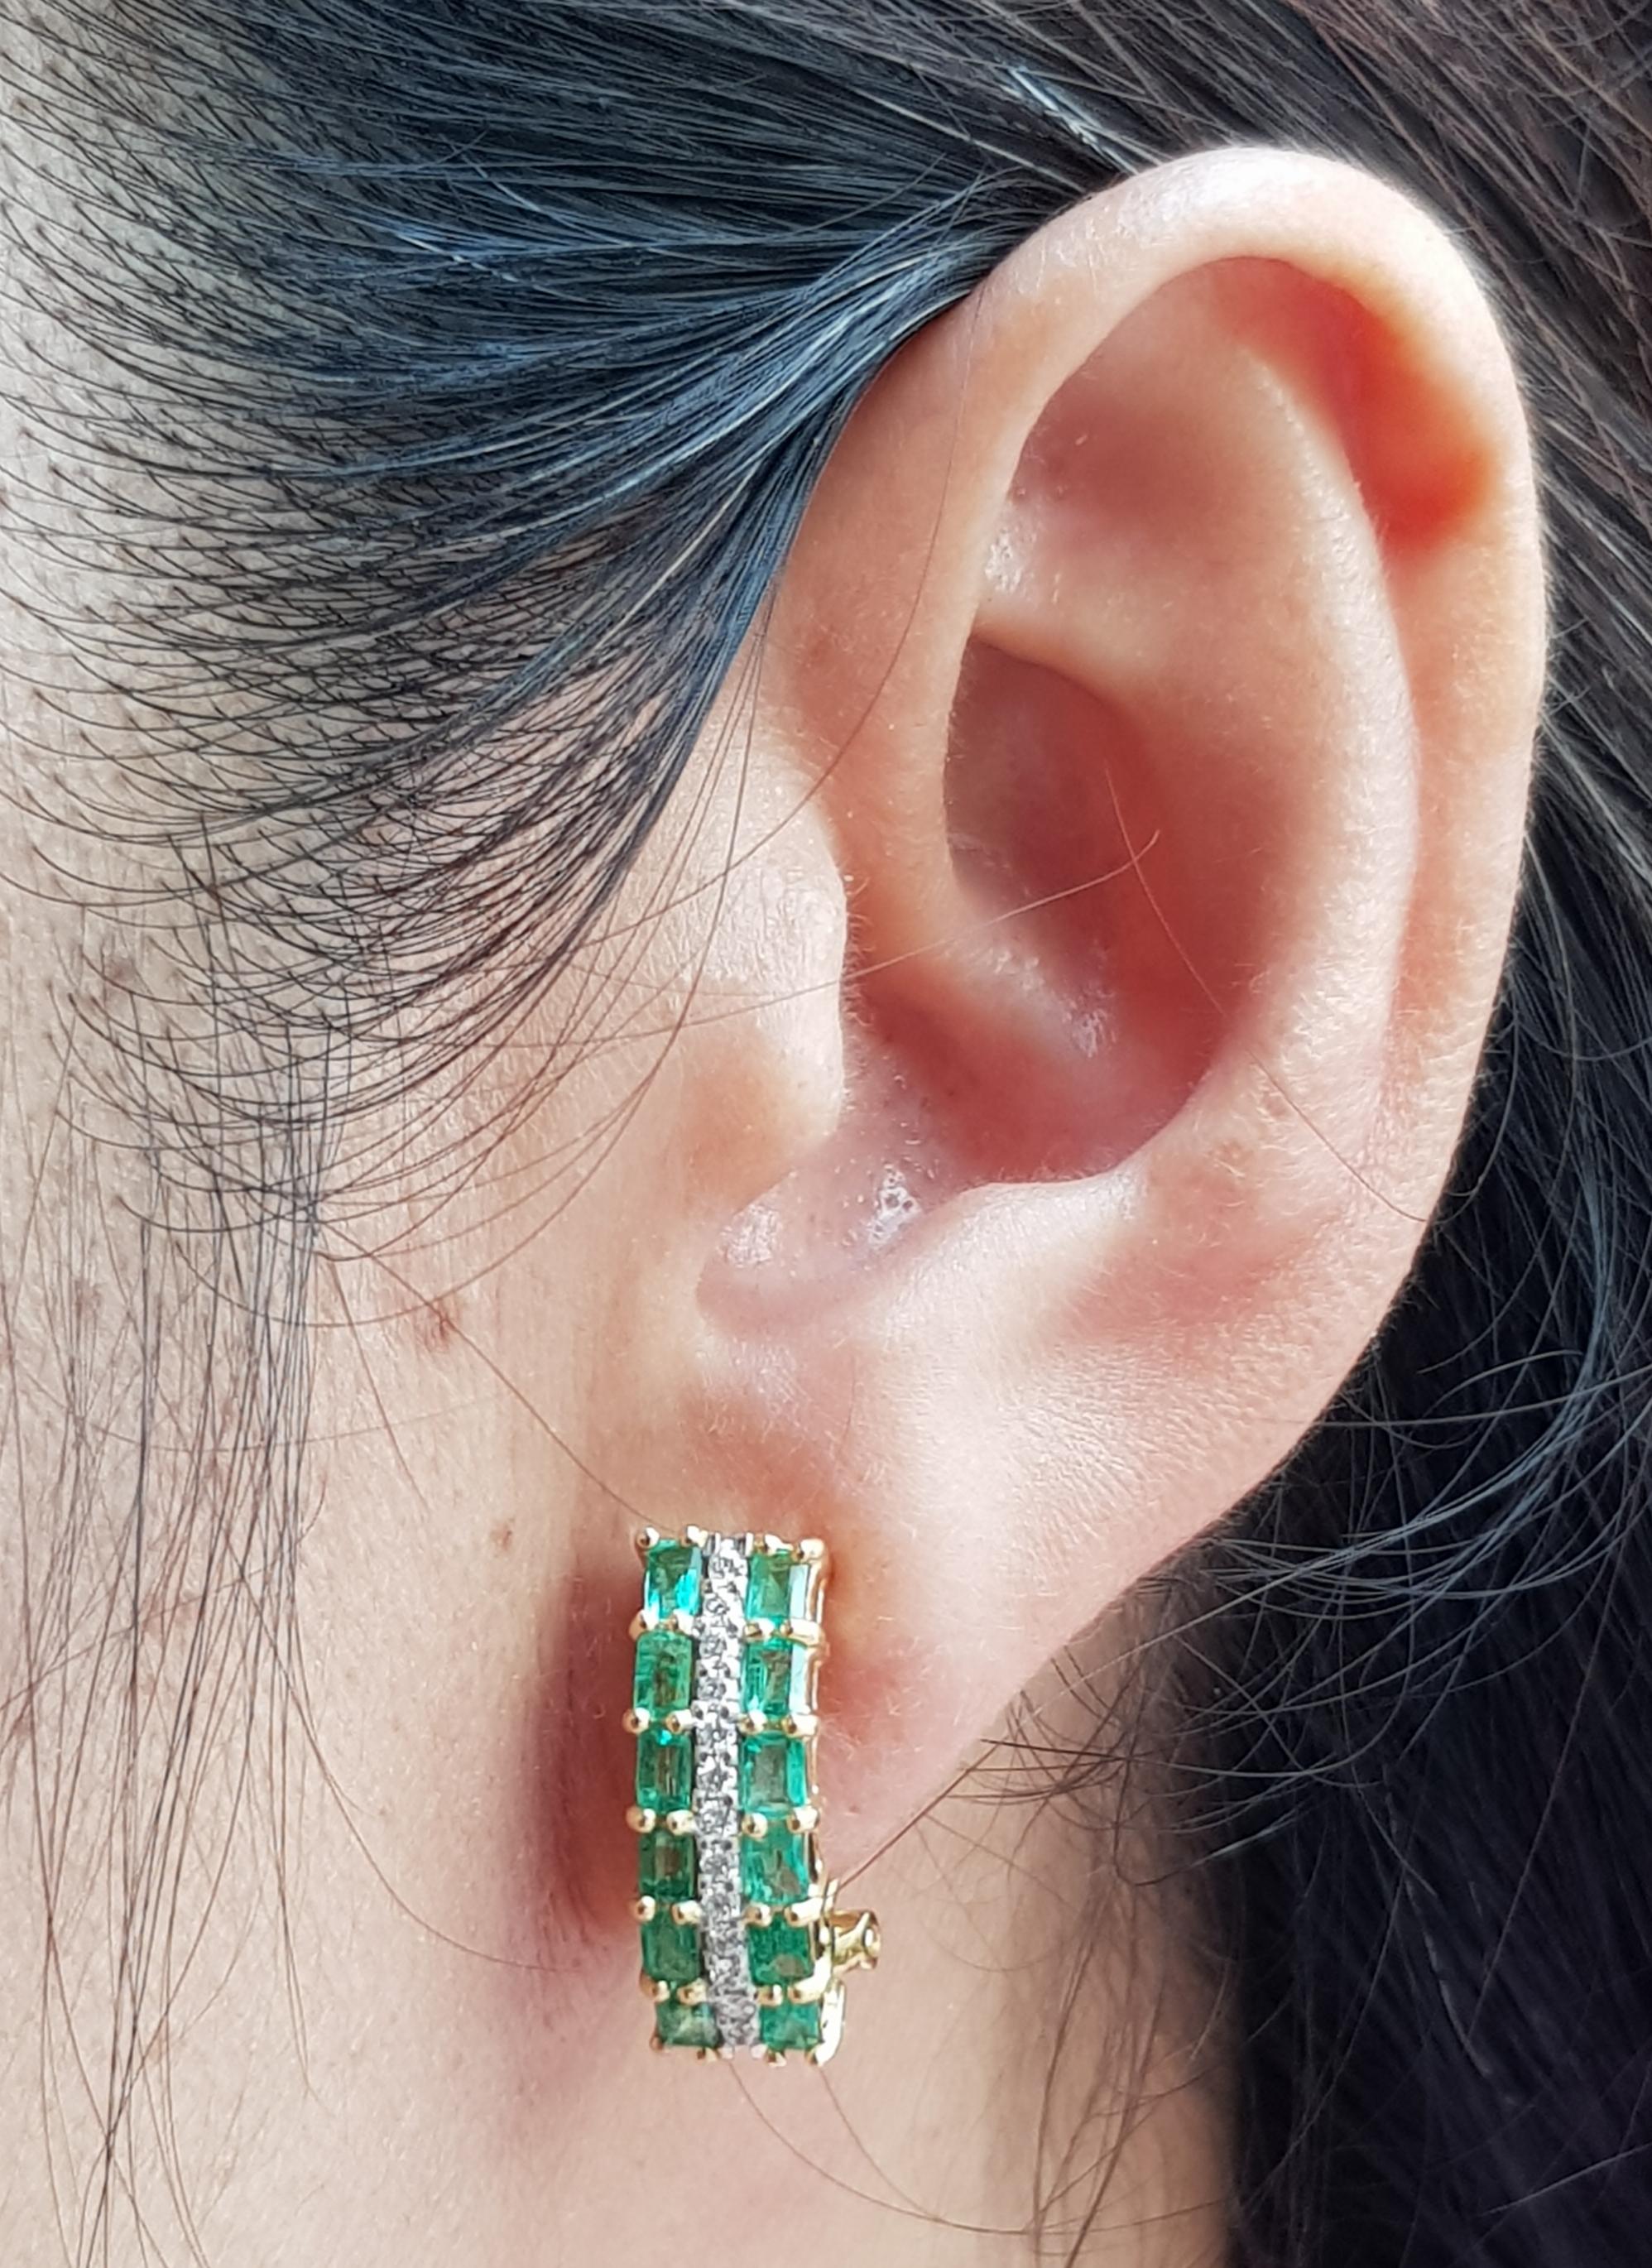 Emerald 1.66 carats with Diamond 0.24 carat Earrings set in 18 Karat Gold Settings

Width:  0.6 cm 
Length: 1.8 cm
Total Weight: 9.36 grams

